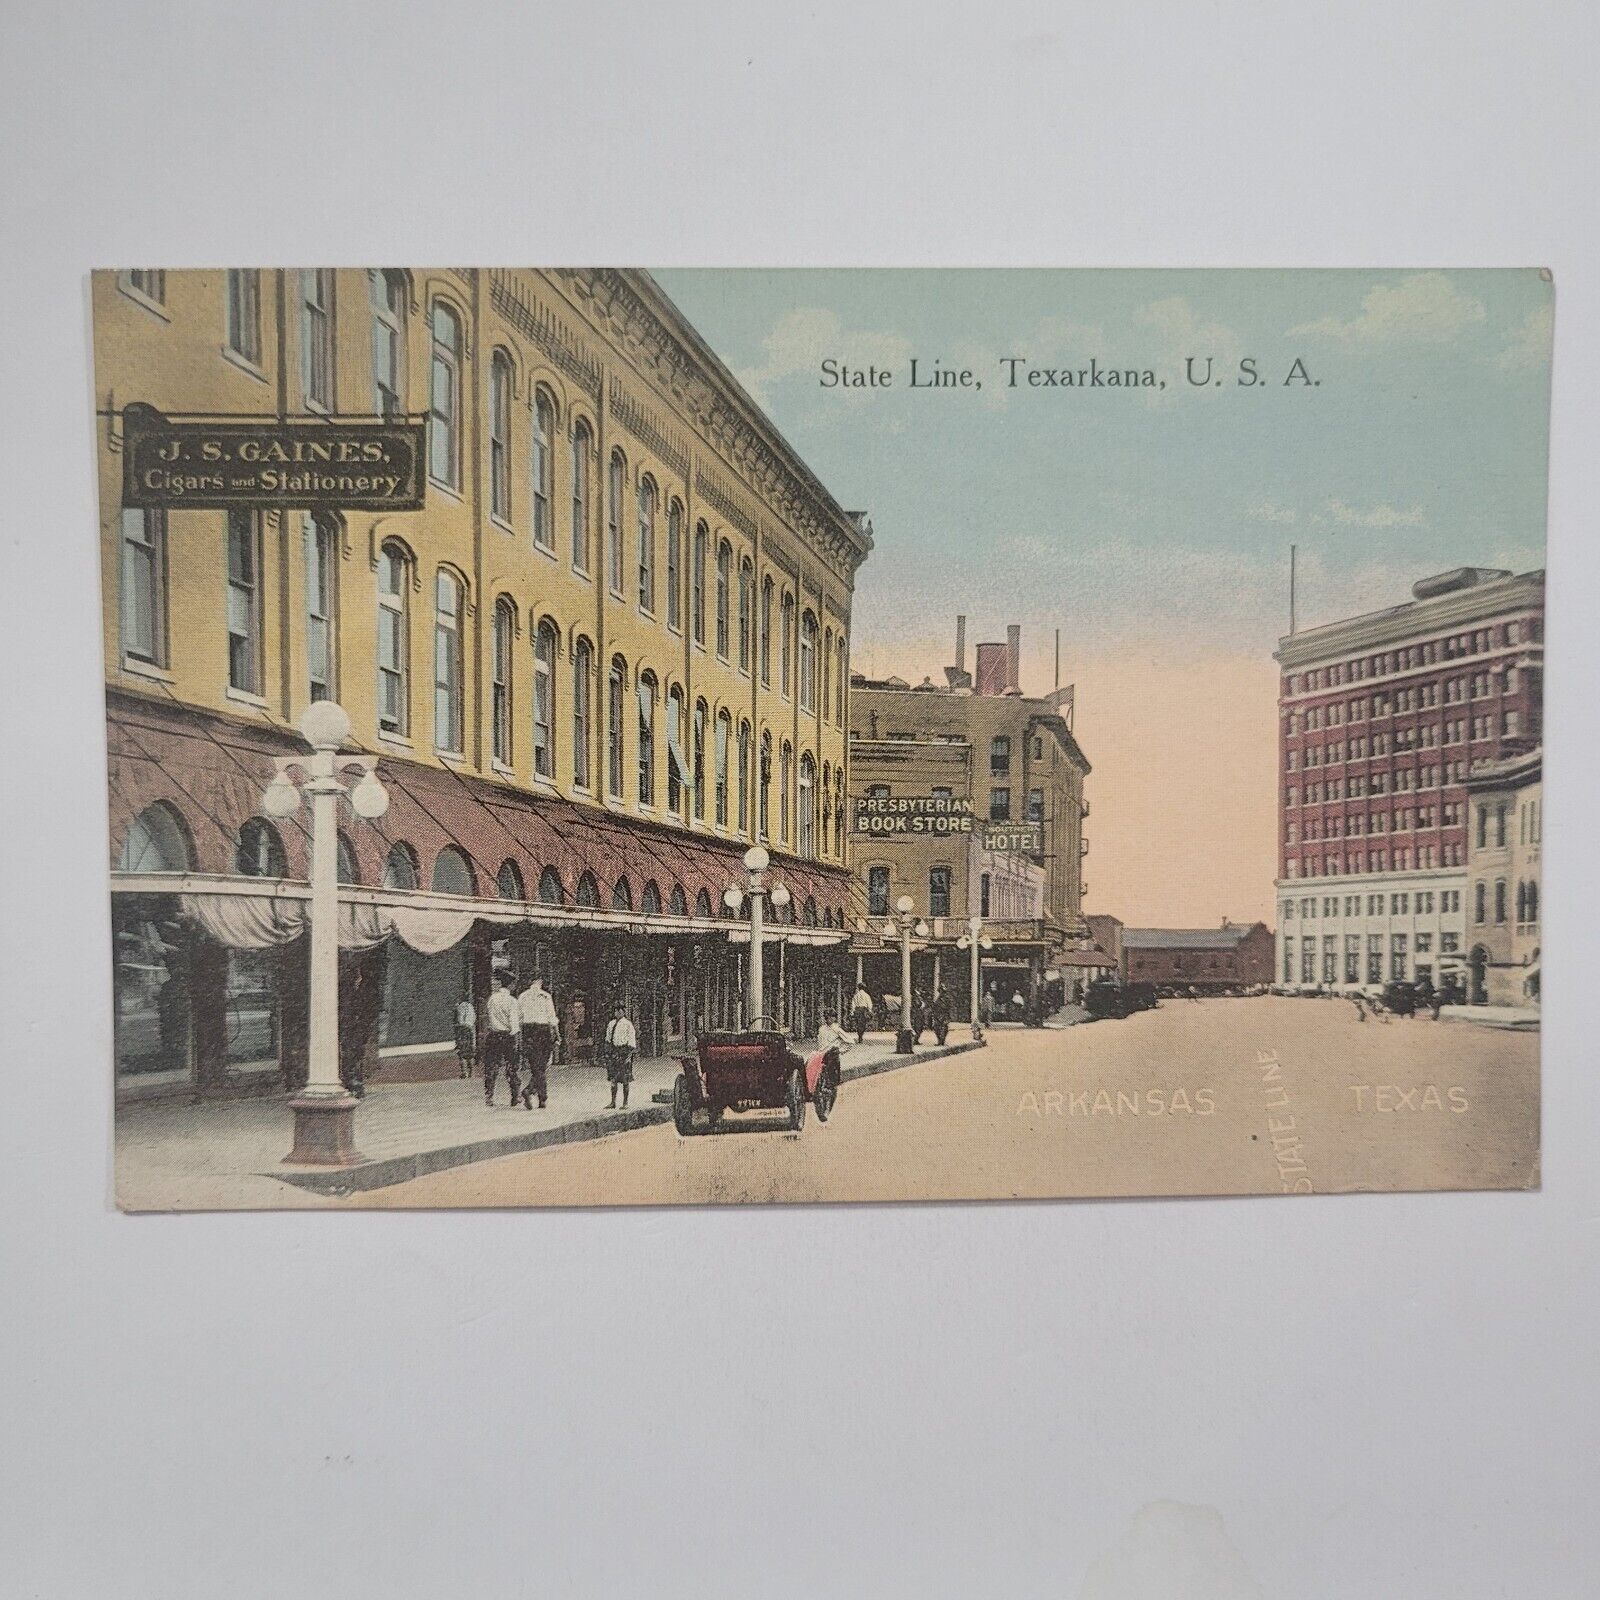 State Line Texarkana Texas Arkansas Vintage Lithograph Postcard Book Store Hotel